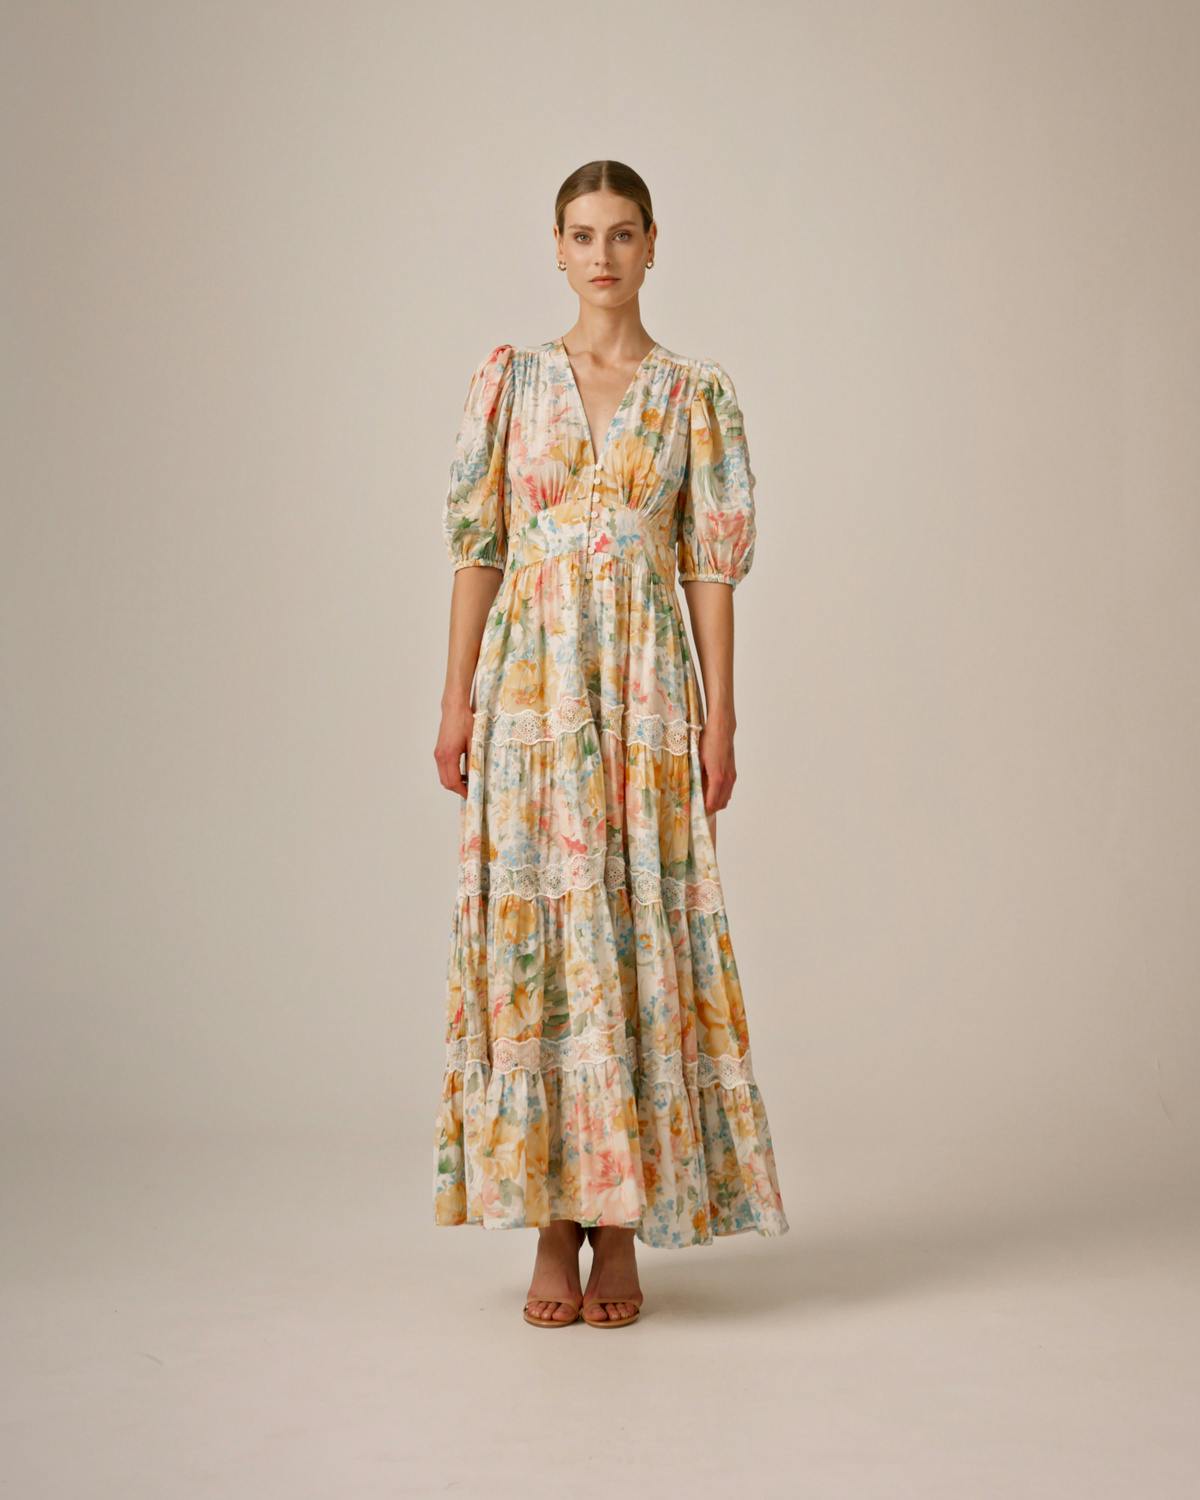 Cotton Slub Tiered Dress, Blooming Pastels. Image #1